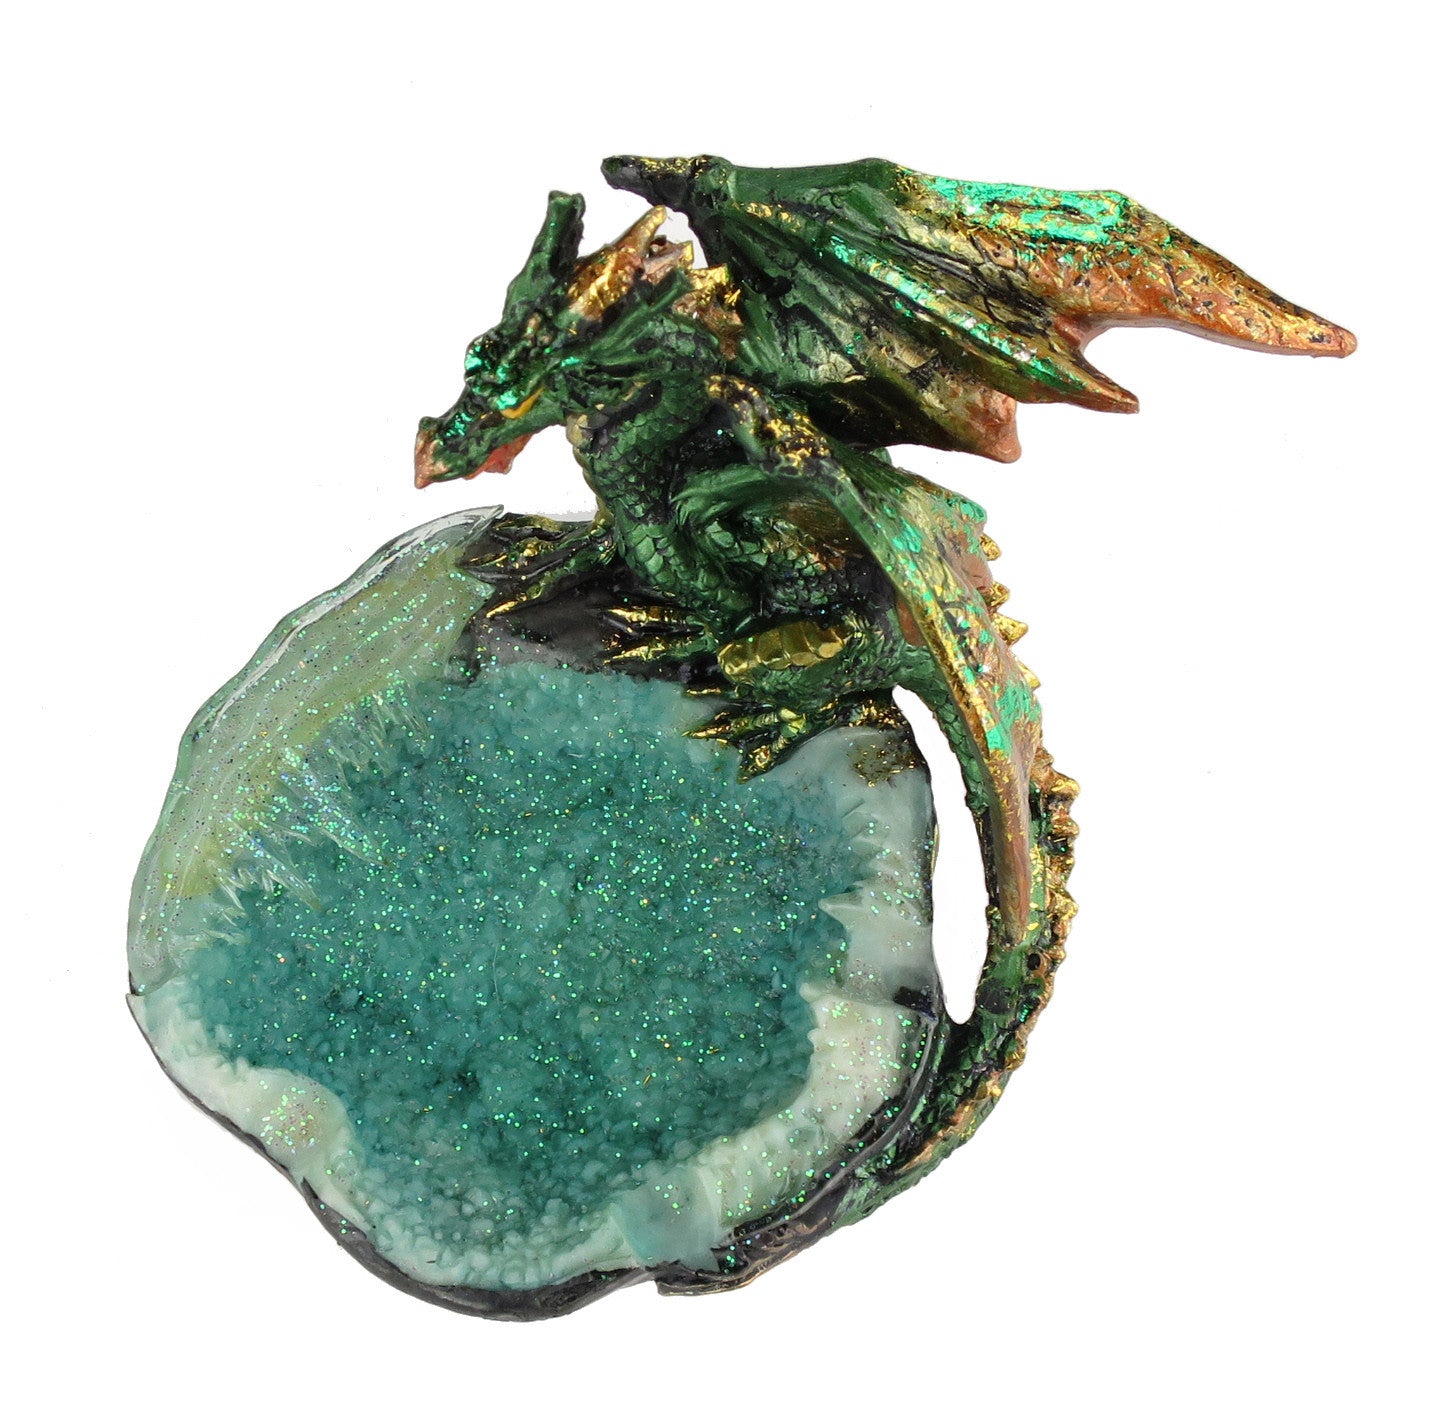 Green Dragon Tray -- DragonSpace